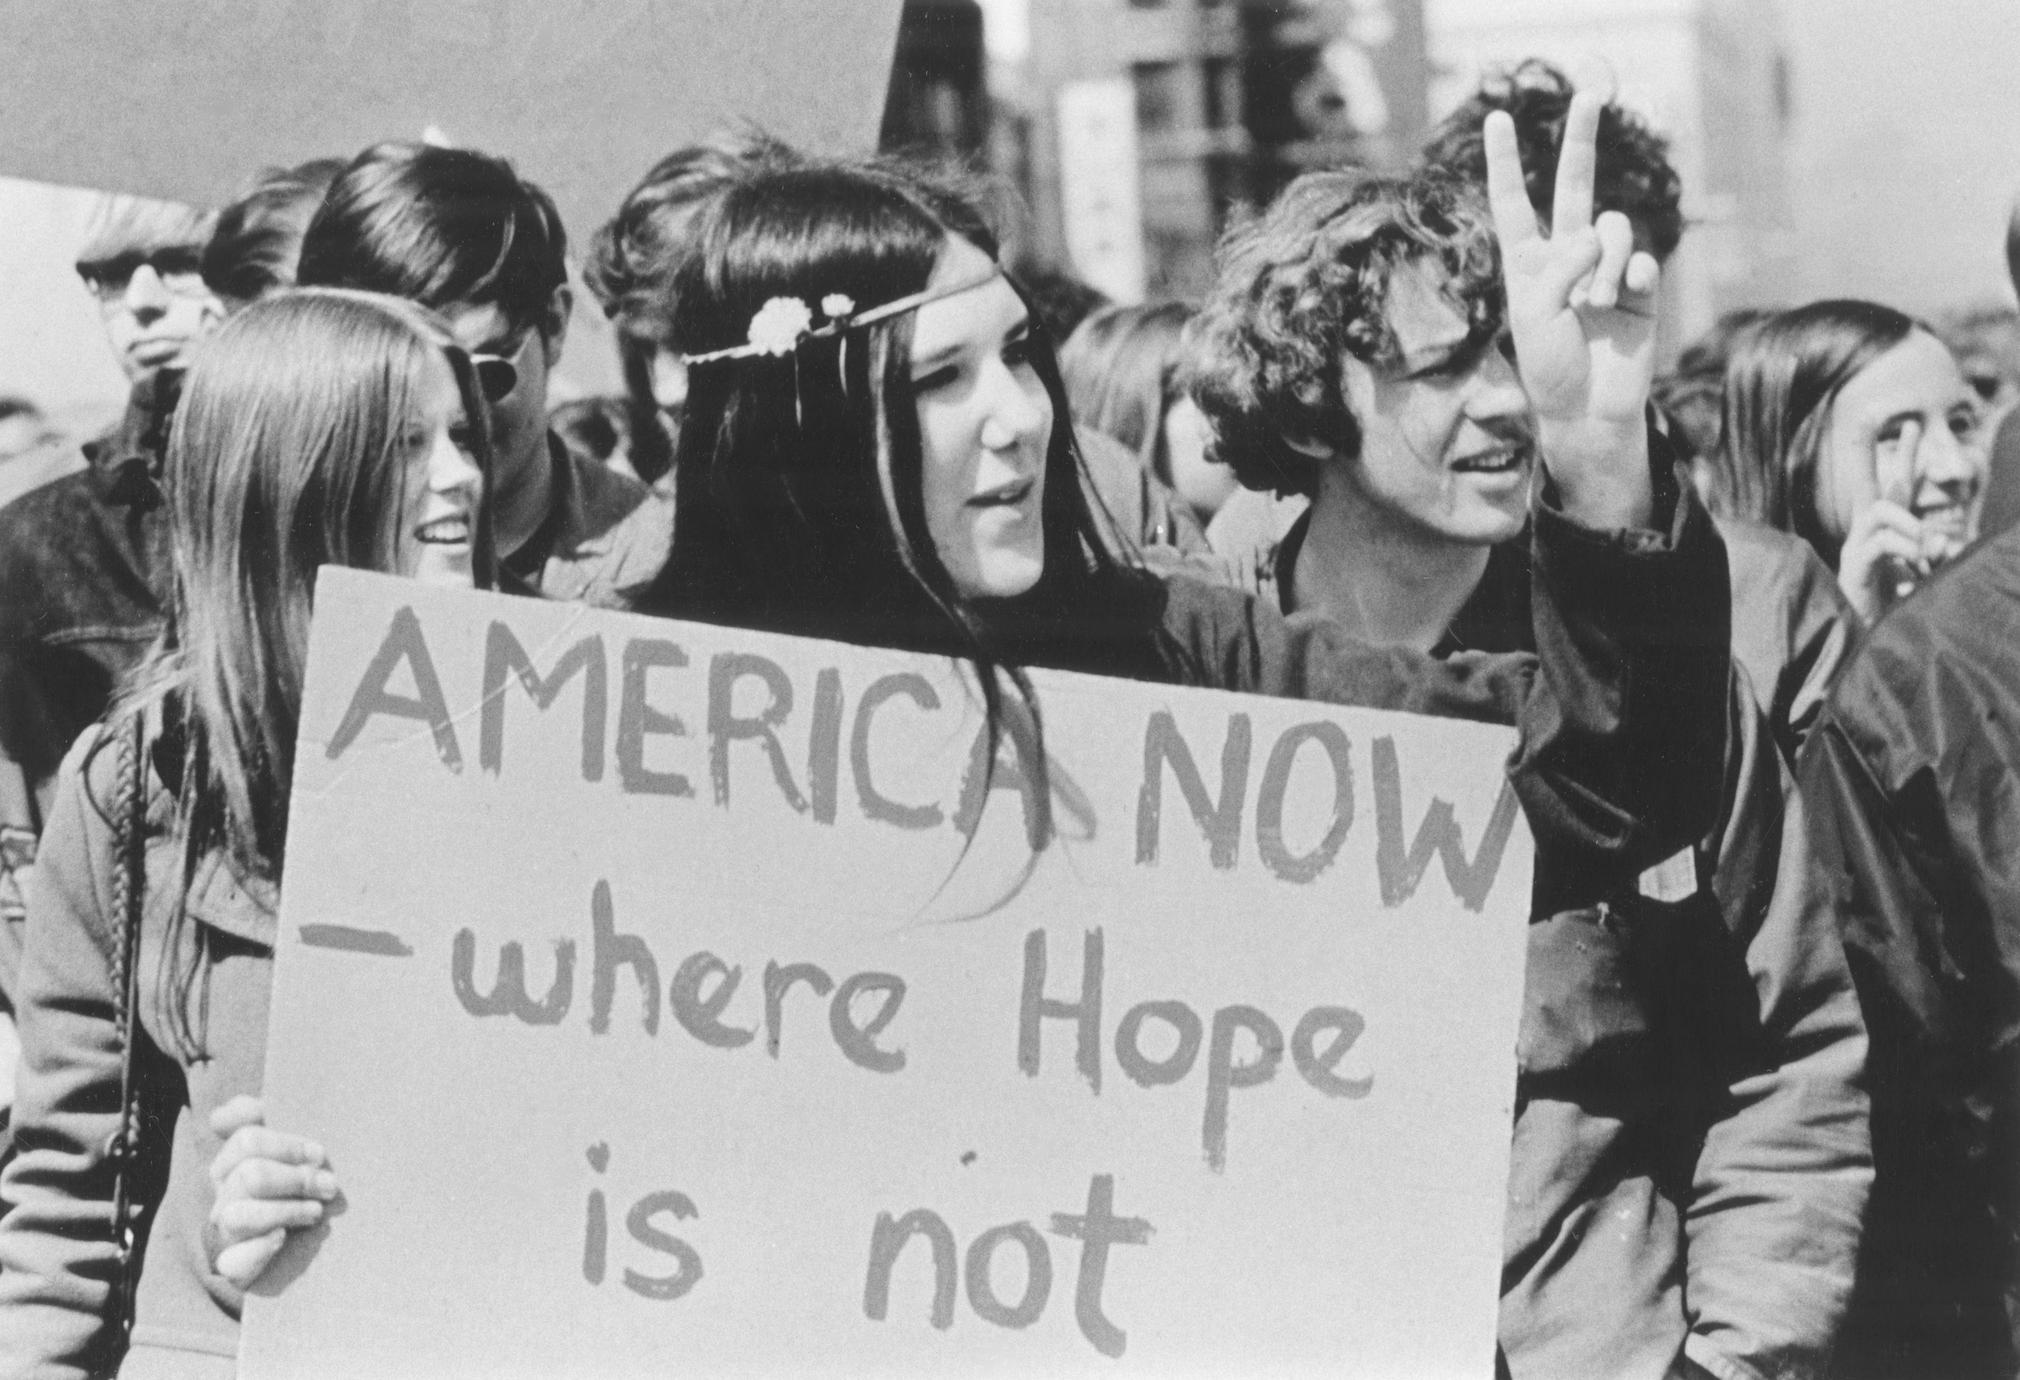 Vietnam War Protest Signs